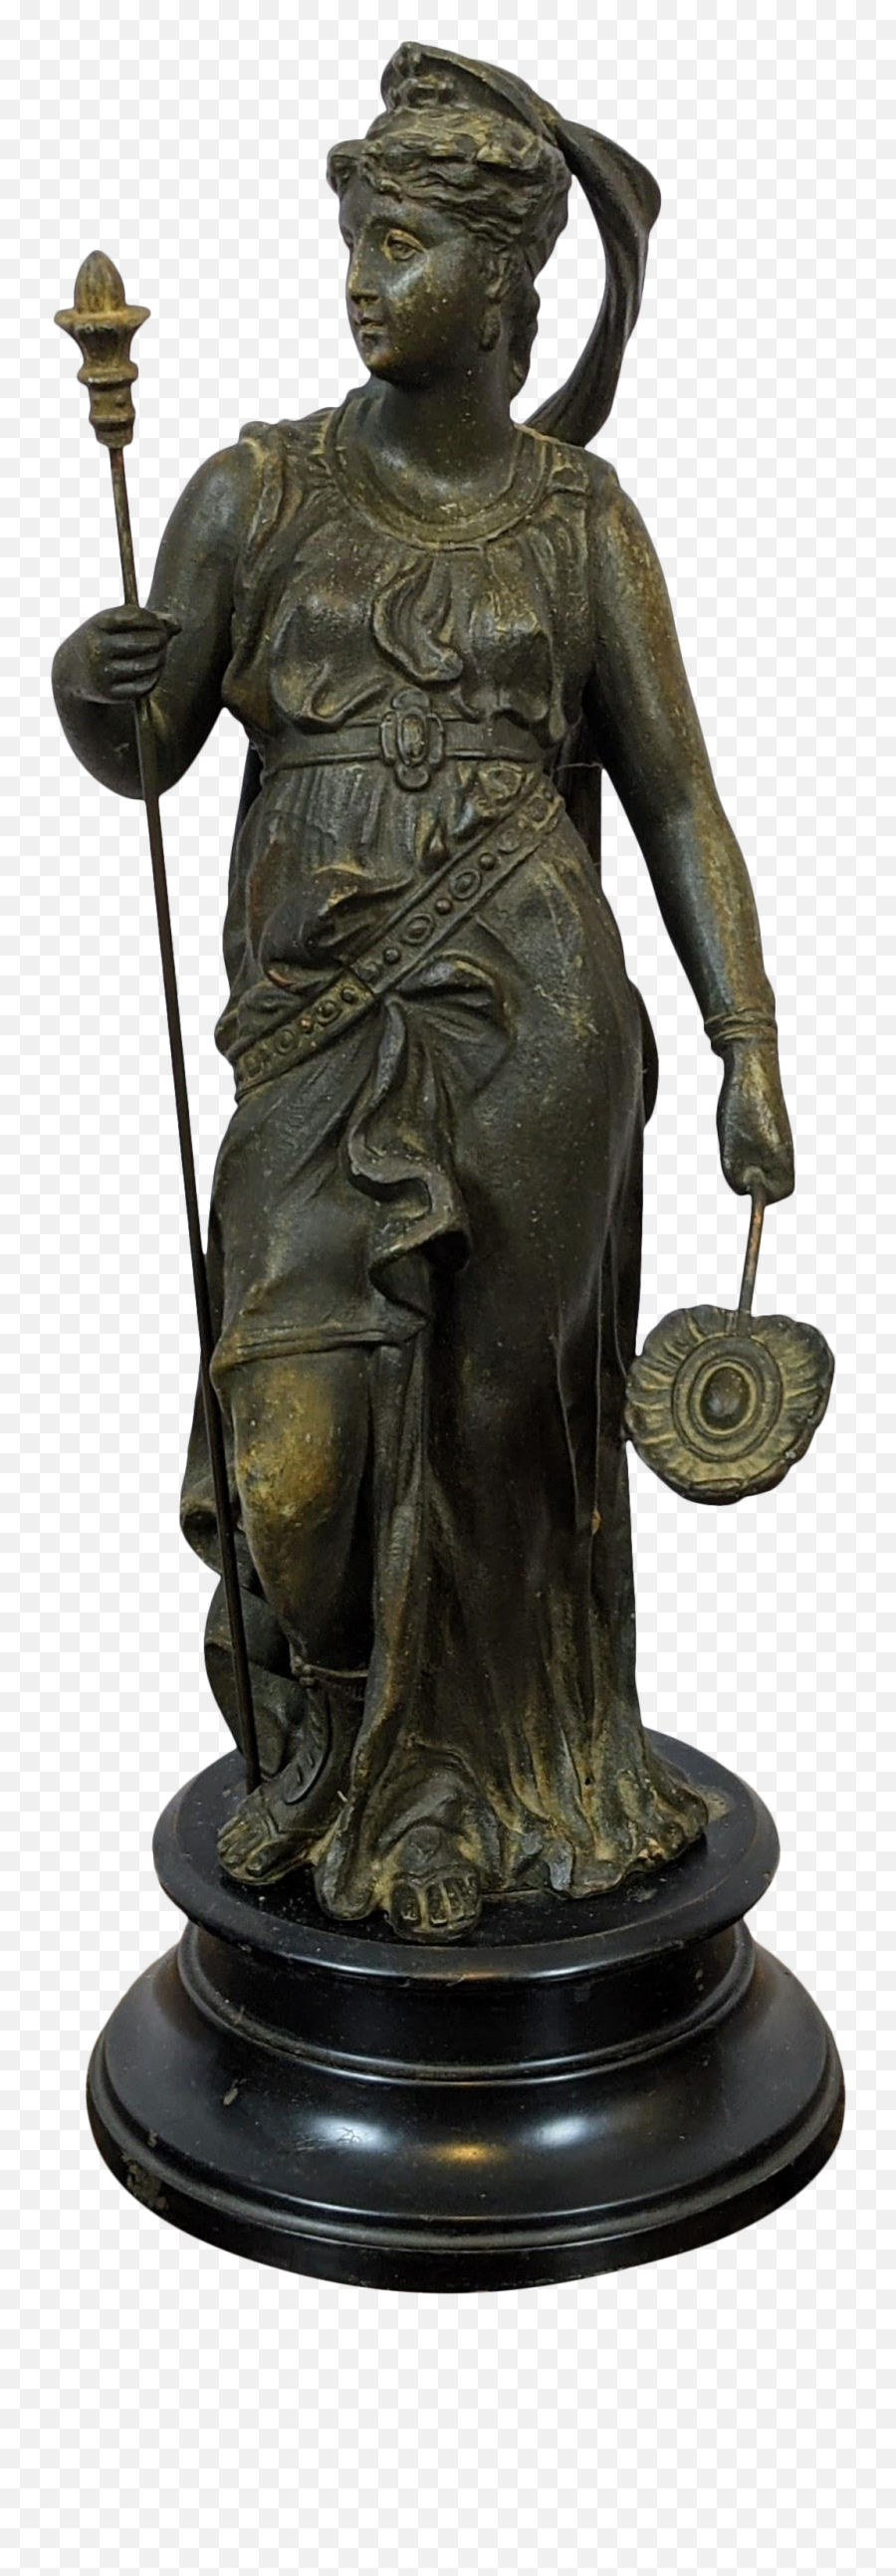 Early 20th Century Greek Goddess Spelter Metal Sculpture - Artifact Emoji,Greek Sculptural Style Lots Of Emotion